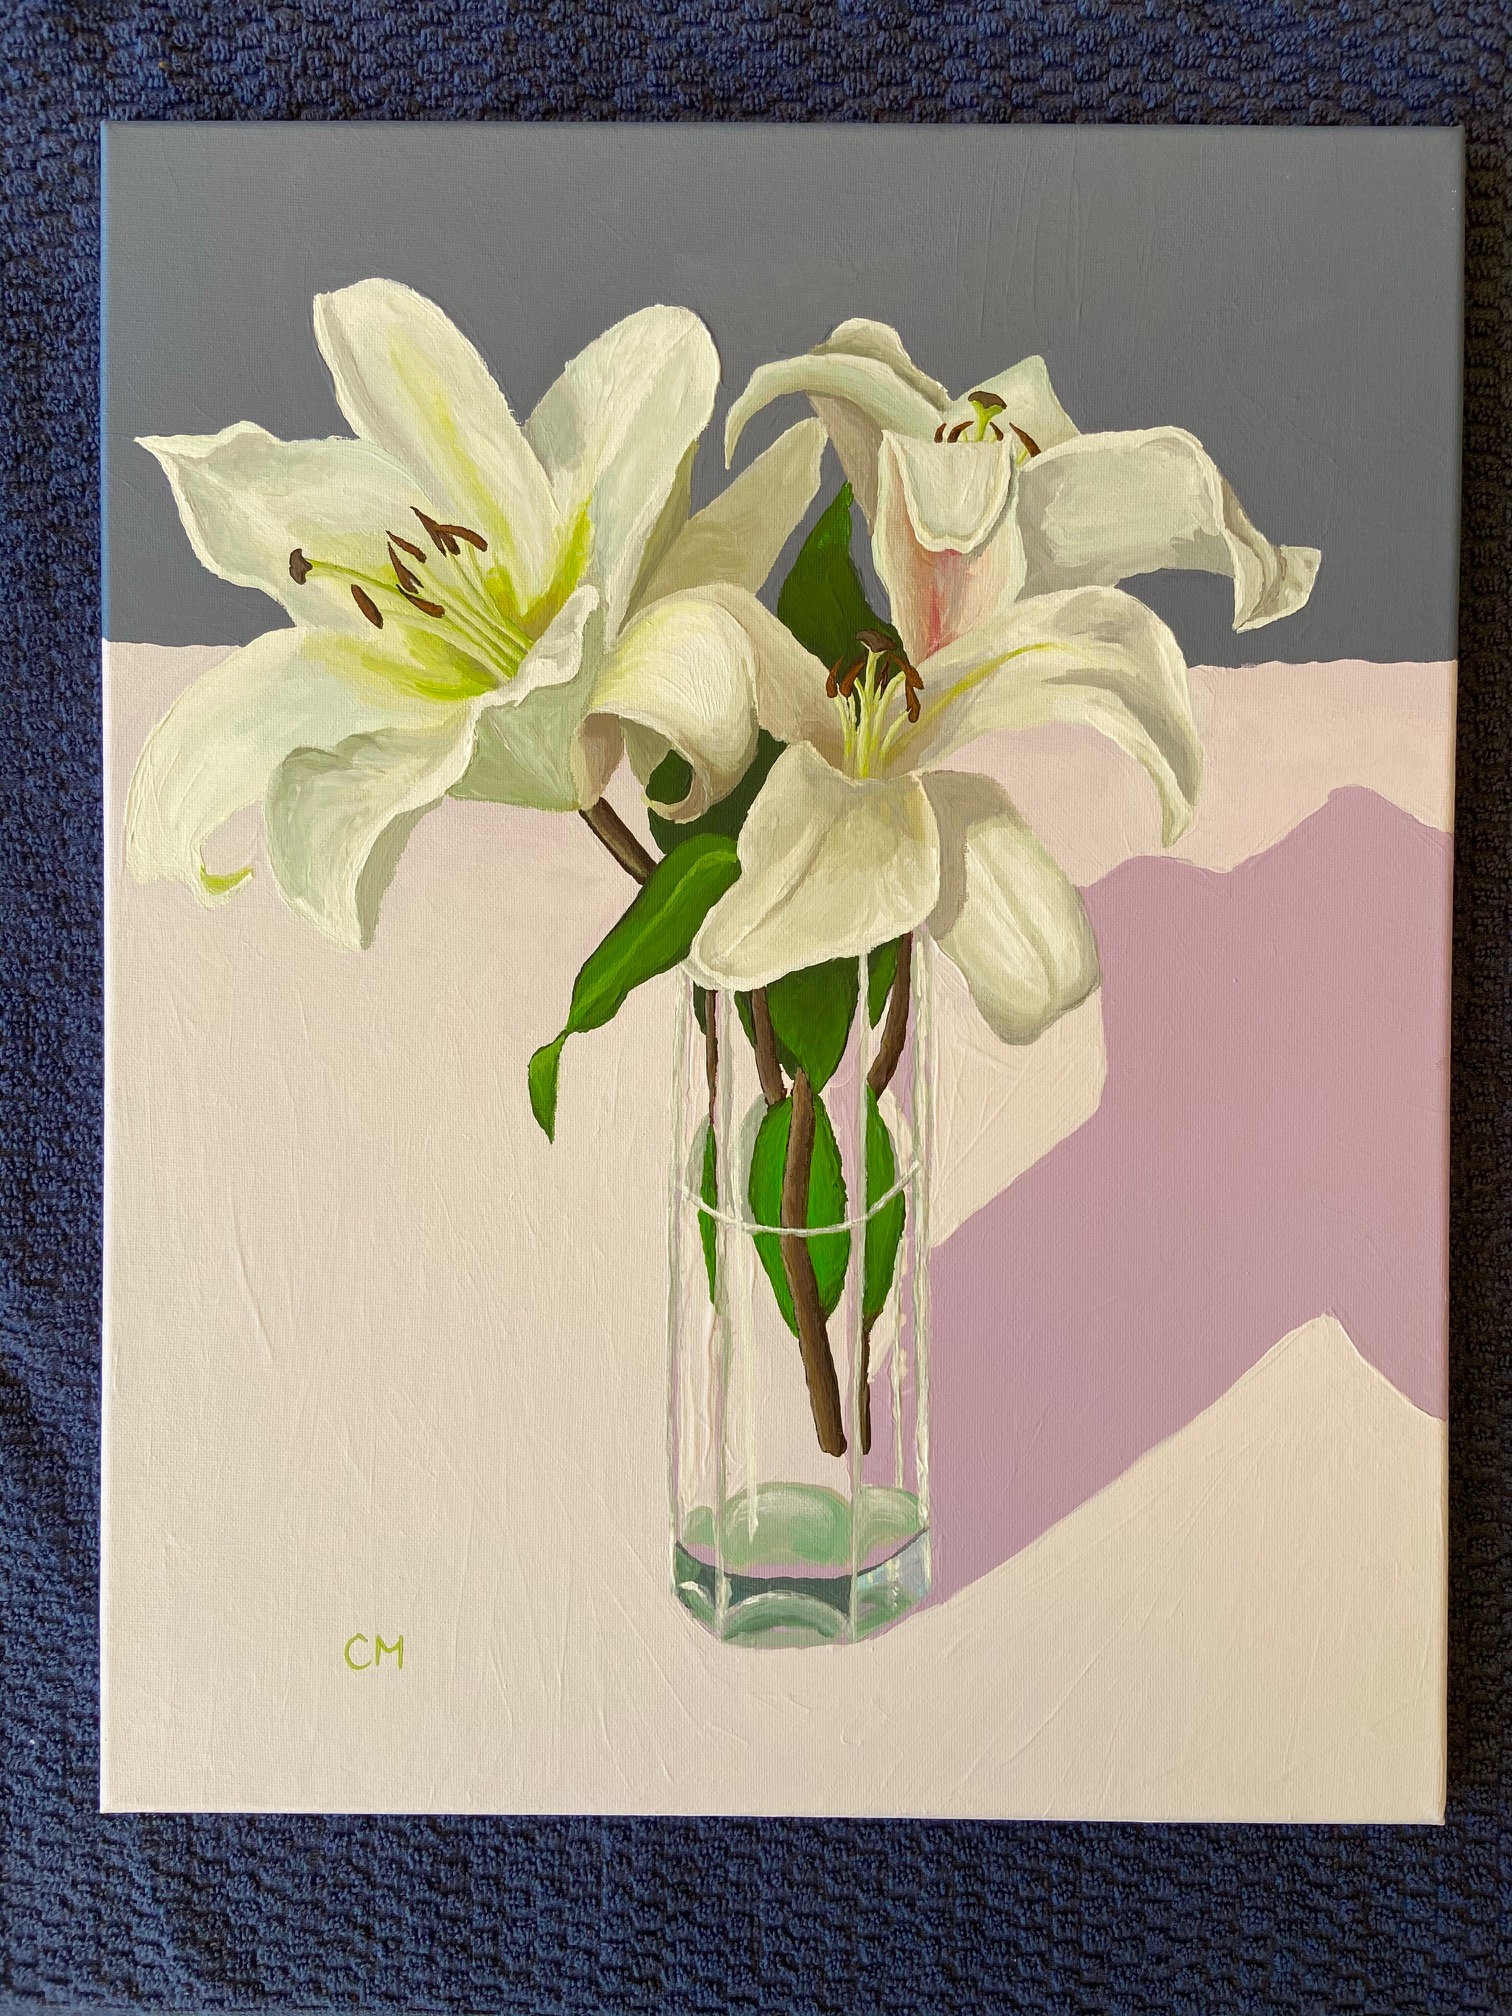 Lilies in Bloom by Claire Manchanda | Lethbridge 20000 2021 Finalists | Lethbridge Gallery